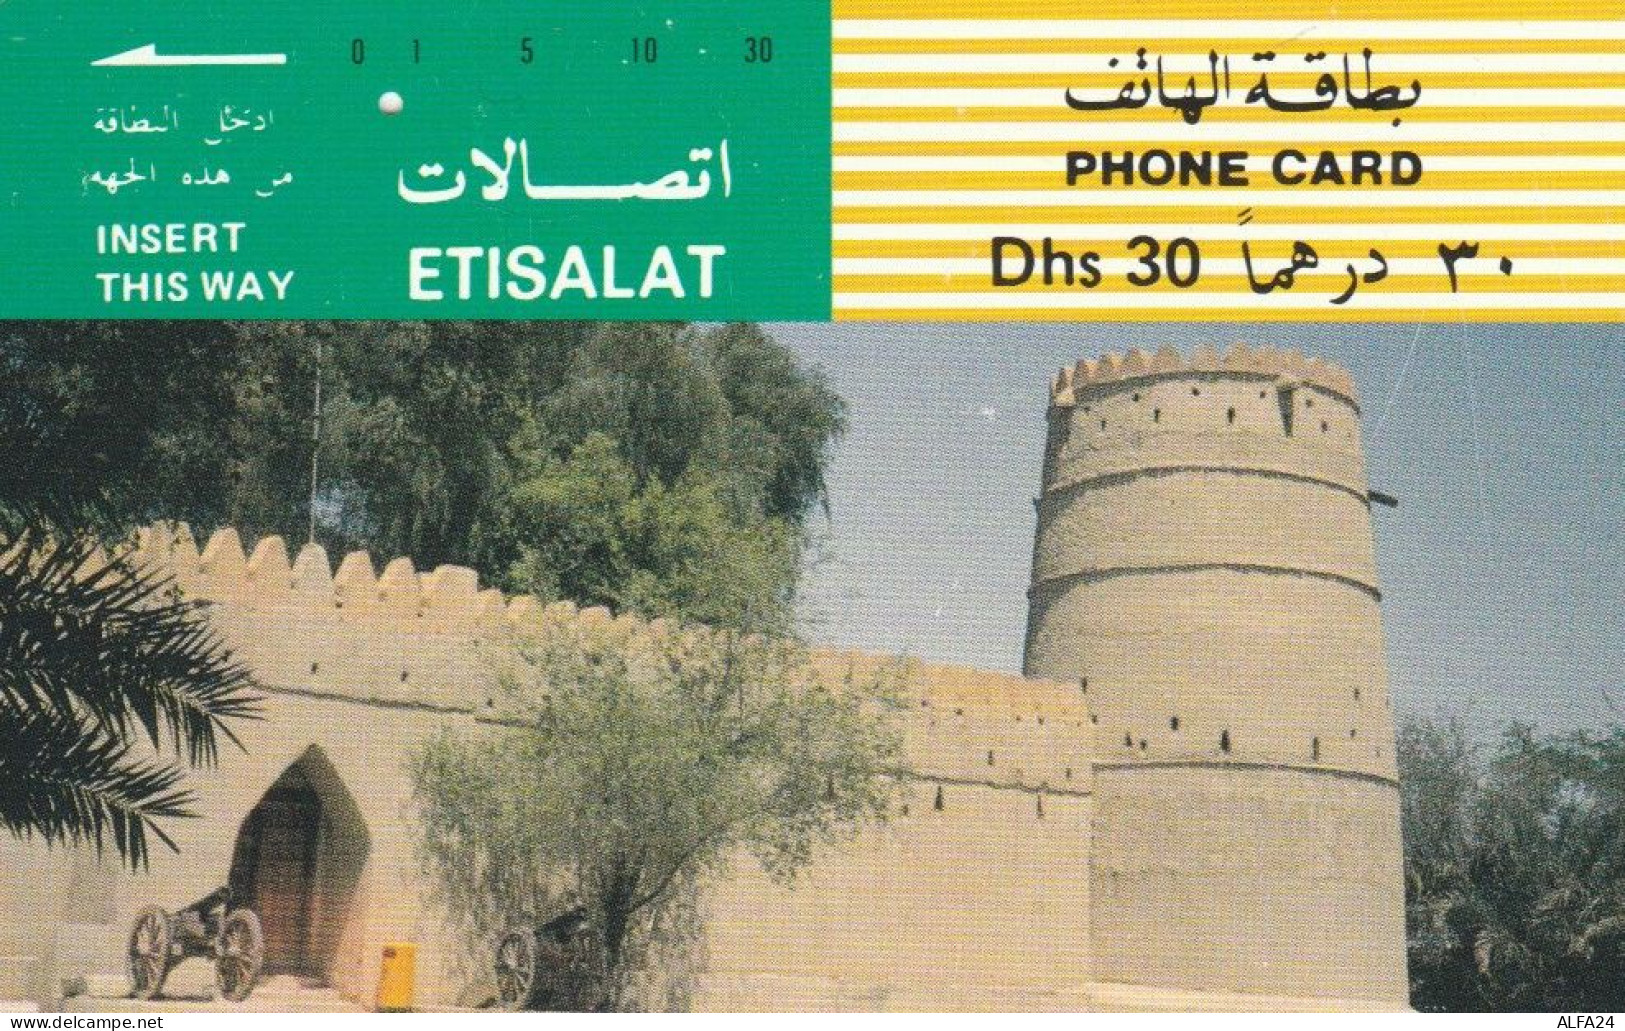 PHONE CARD EMIRATI ARABI (E53.15.8 - Emirats Arabes Unis